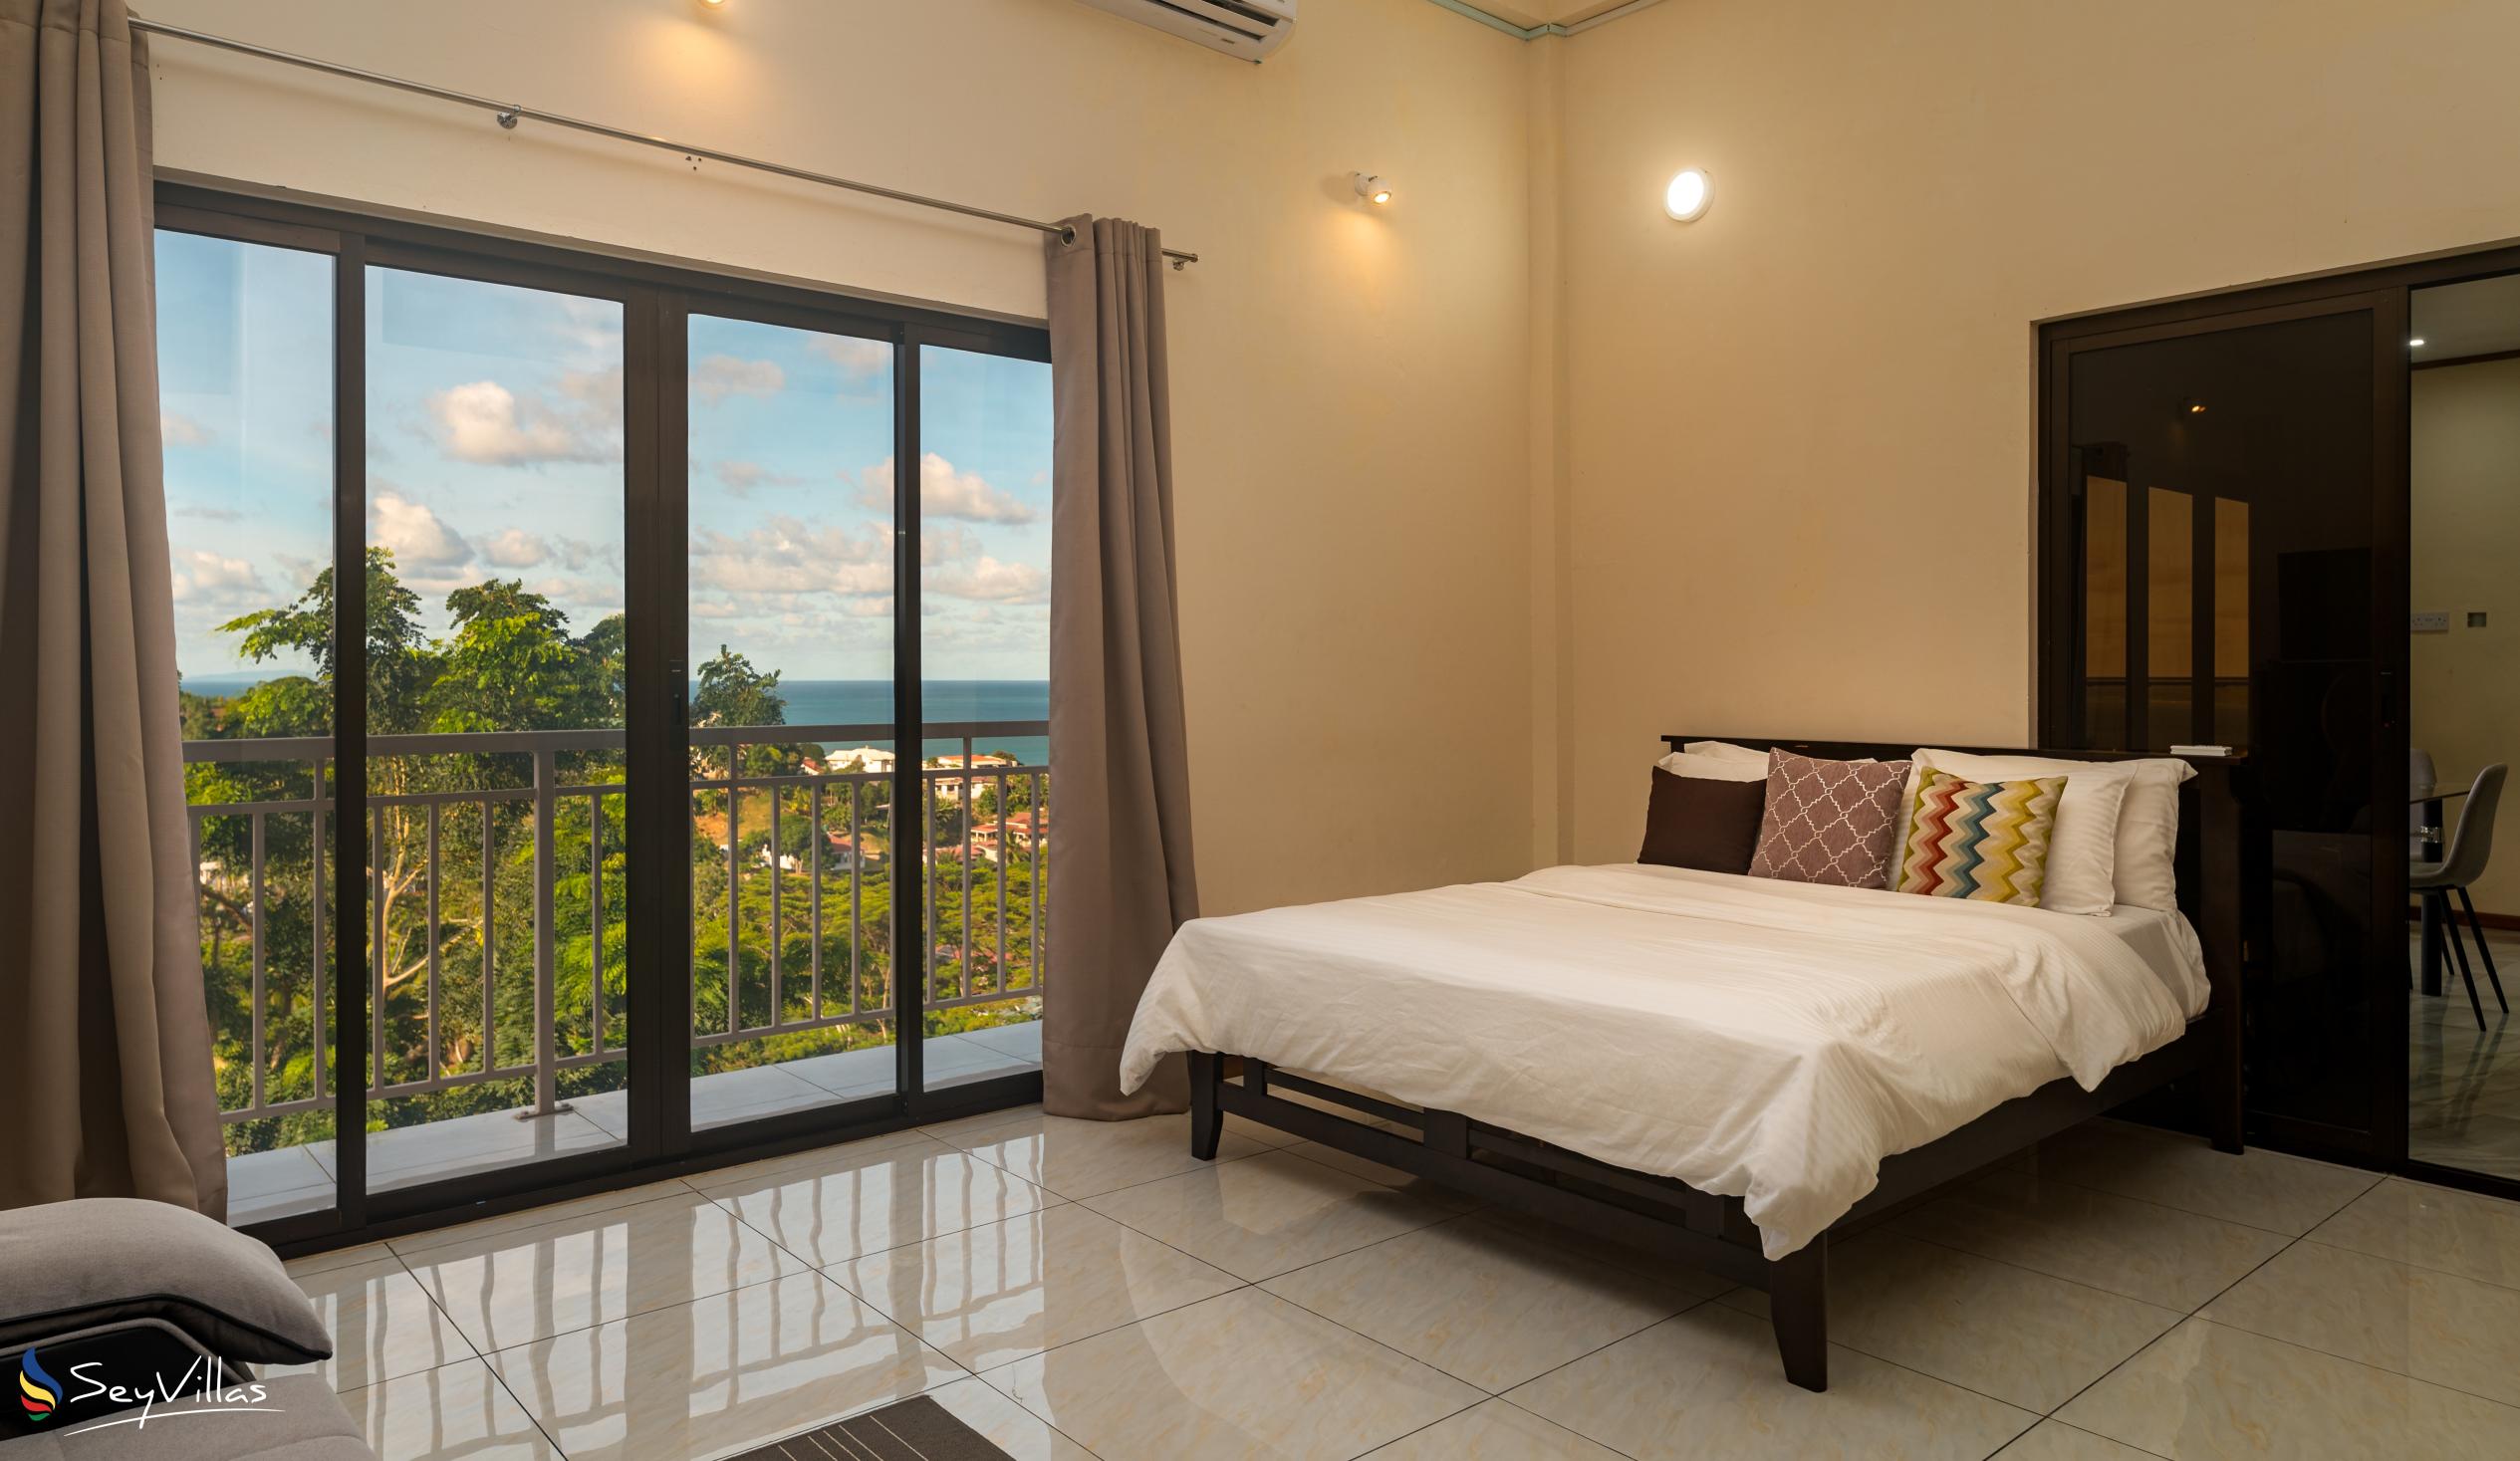 Photo 50: Maison L'Horizon - 1-Bedroom Apartment Lalin - Mahé (Seychelles)